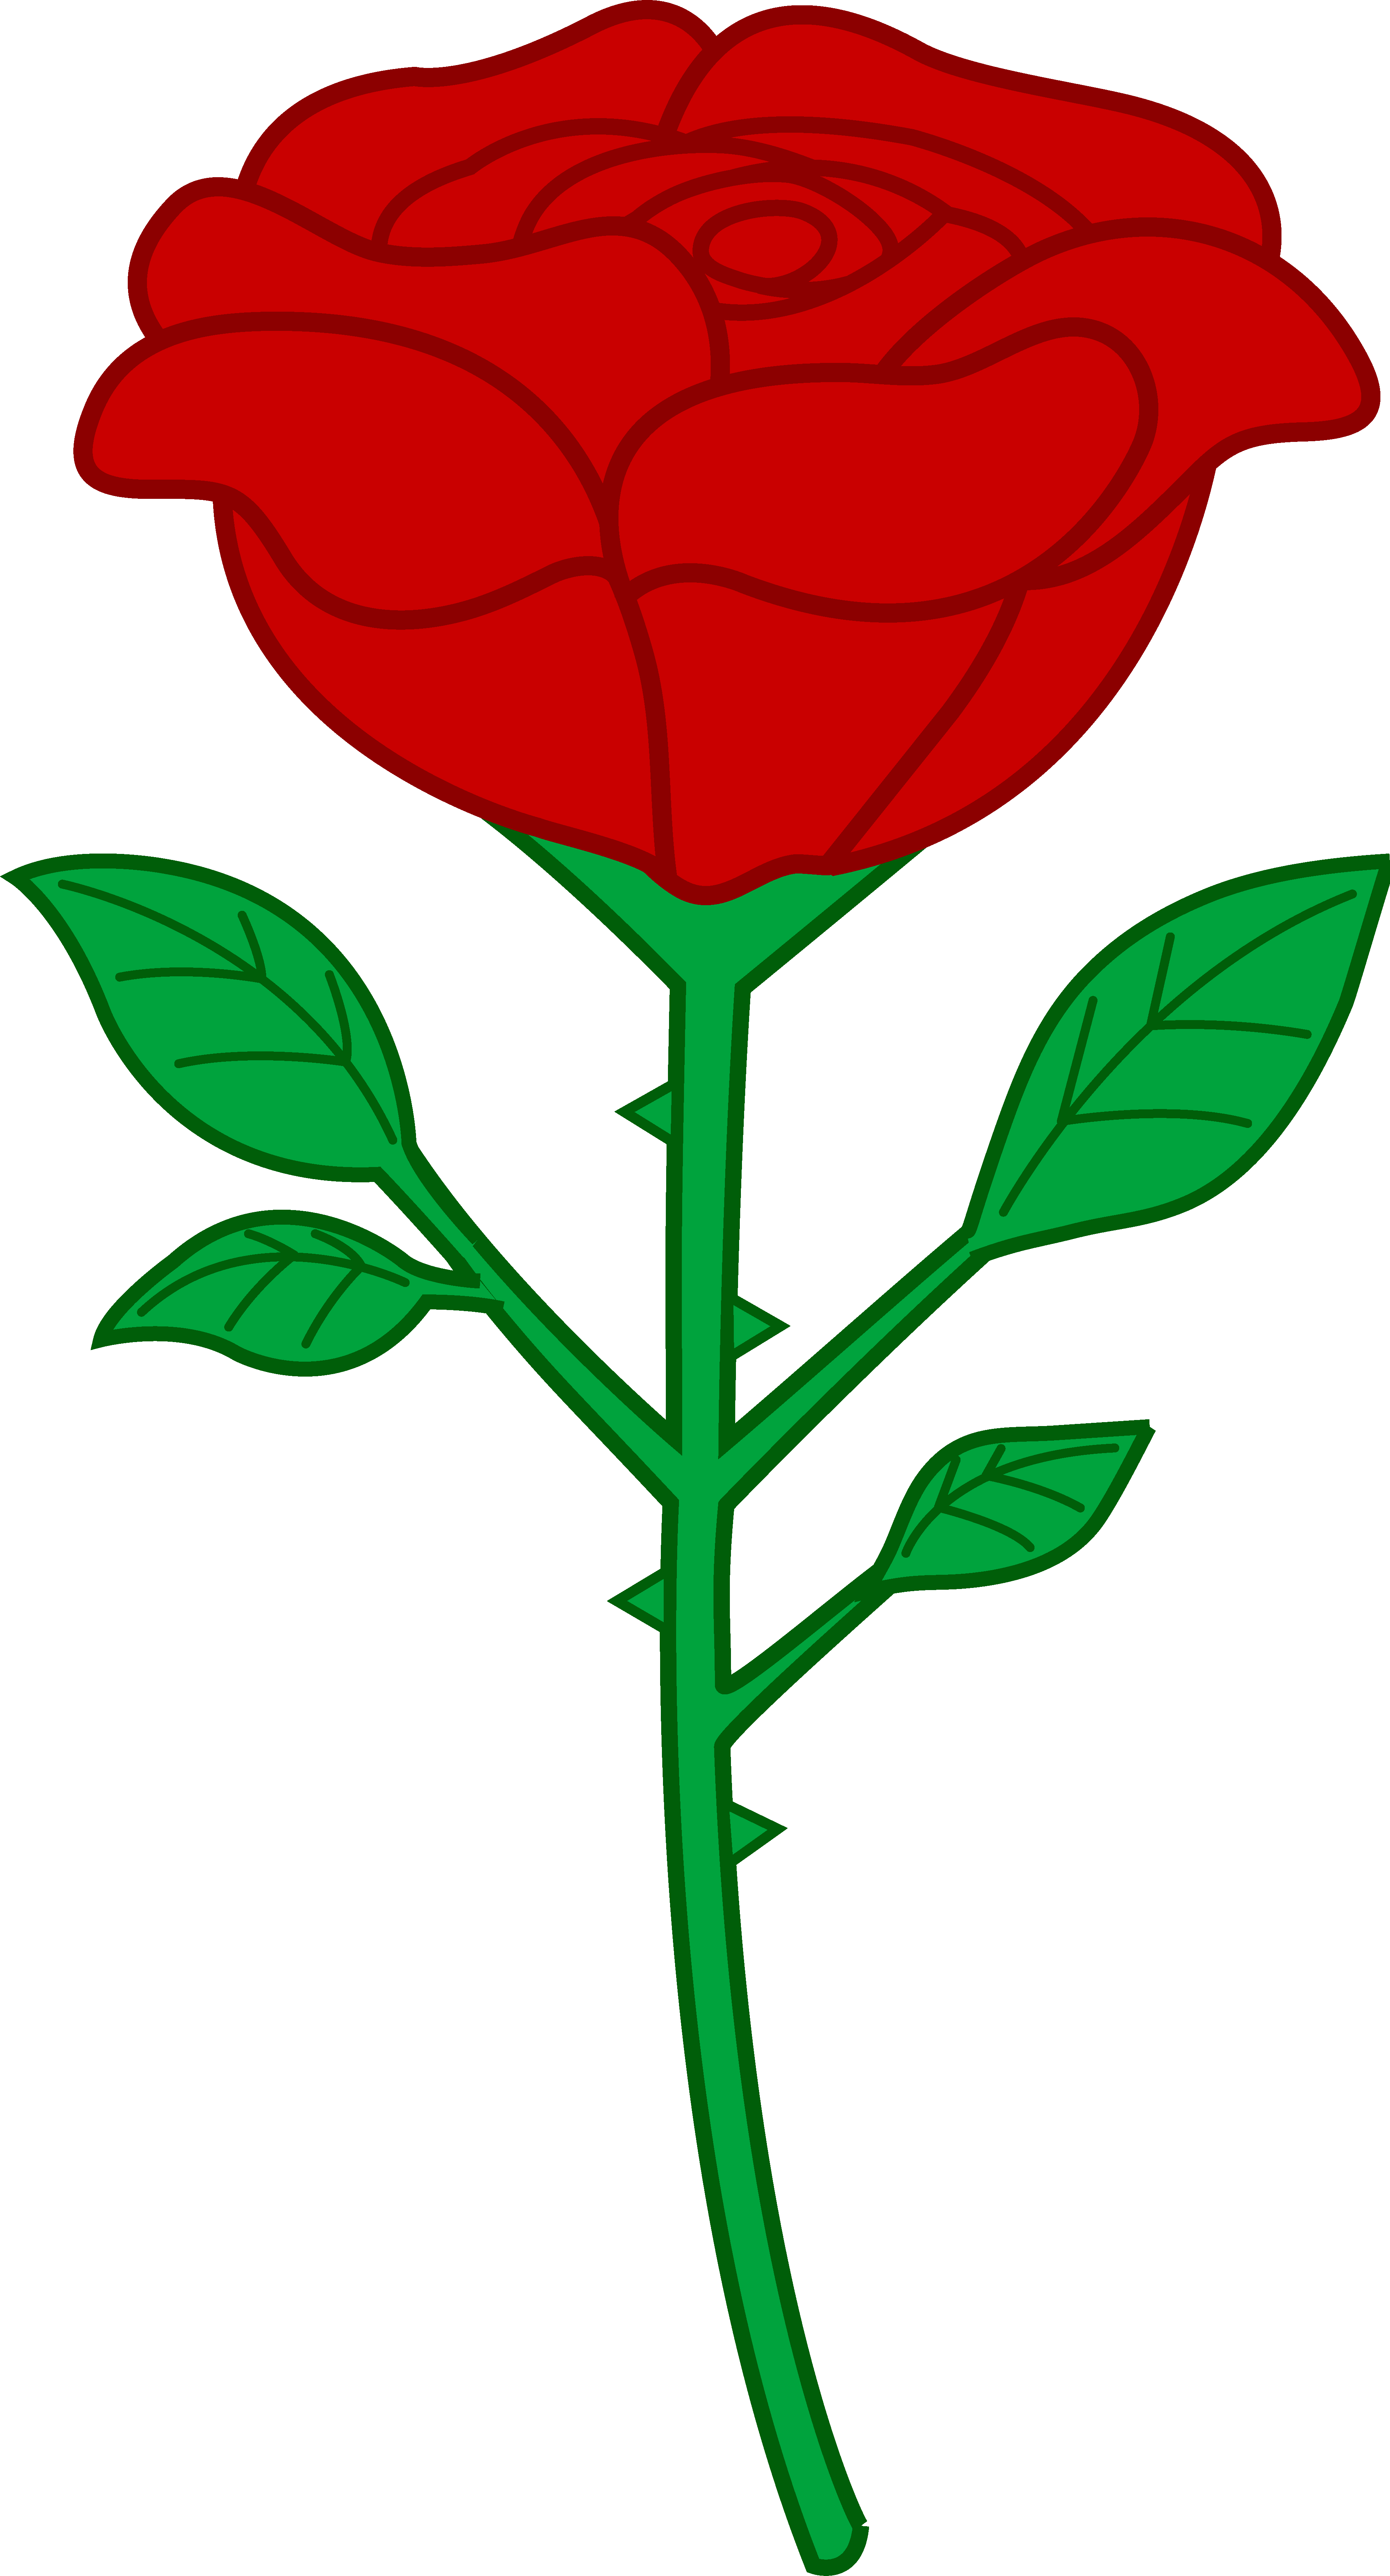 Red roses clip art